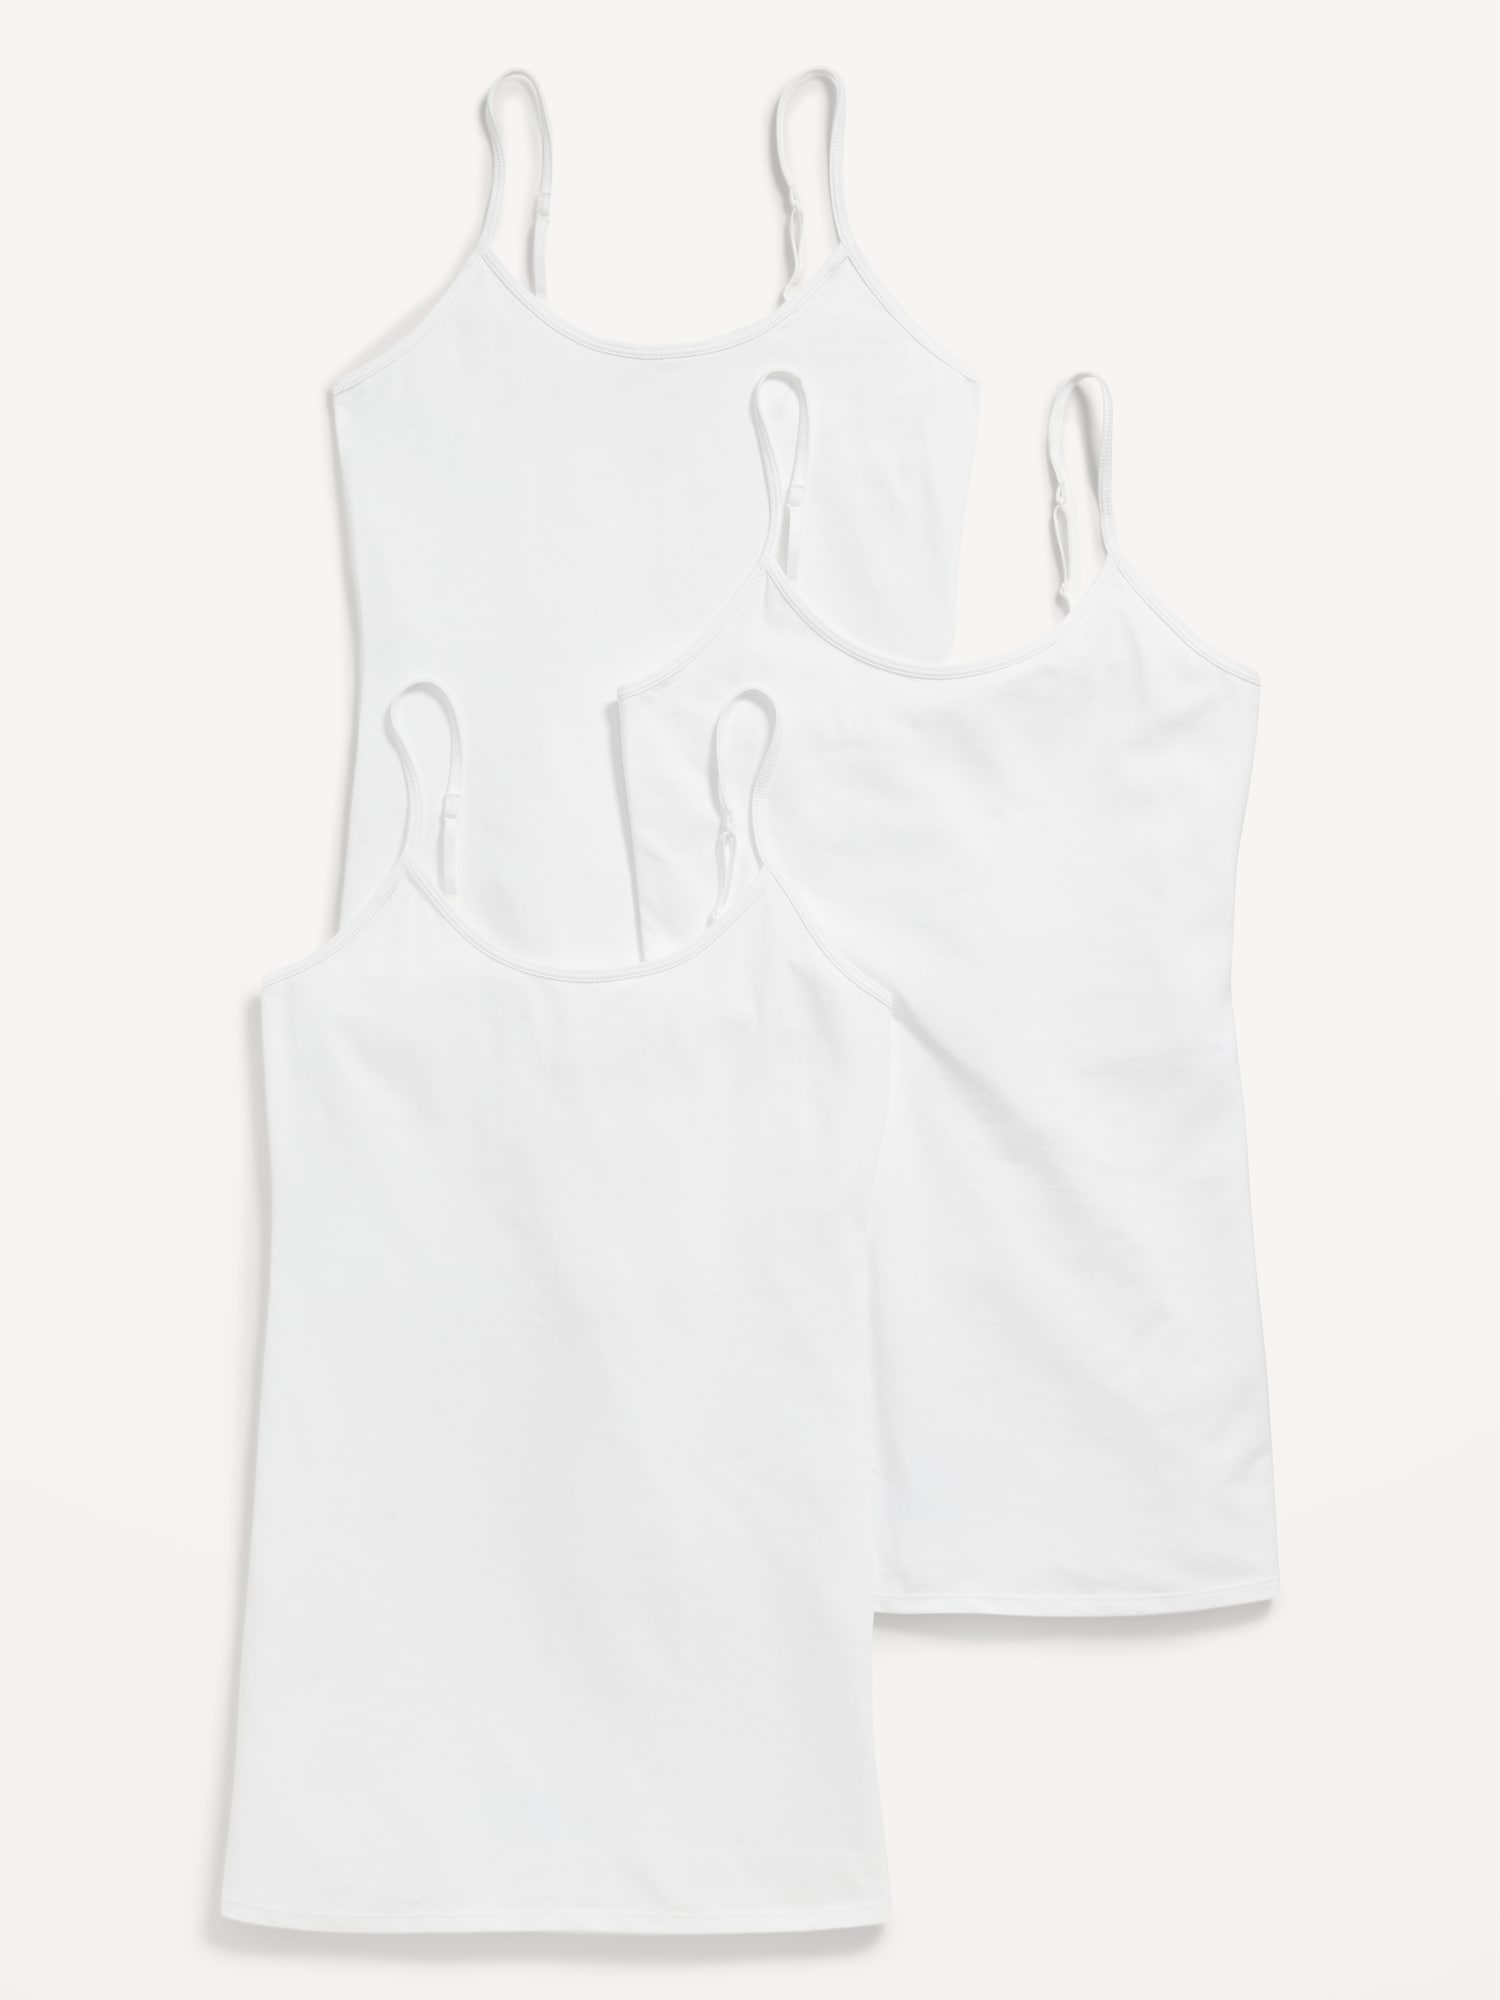 AMVELOP Basic Tank Top for Women Undershirts Sleeveless Layering